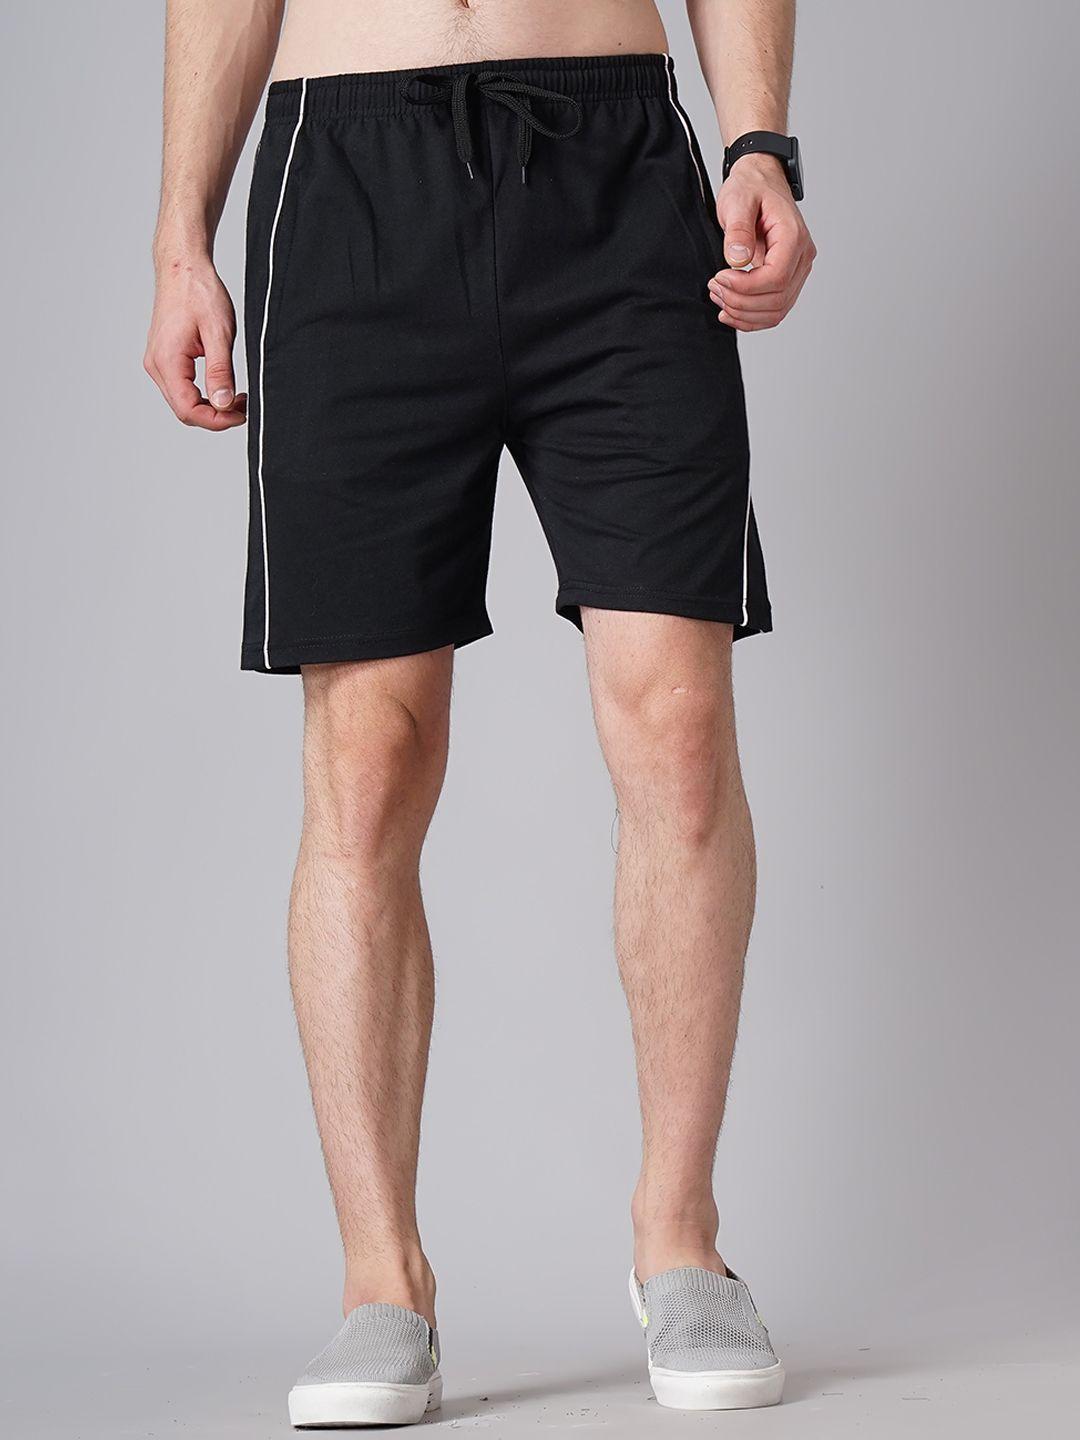 madsto men cotton slim fit shorts